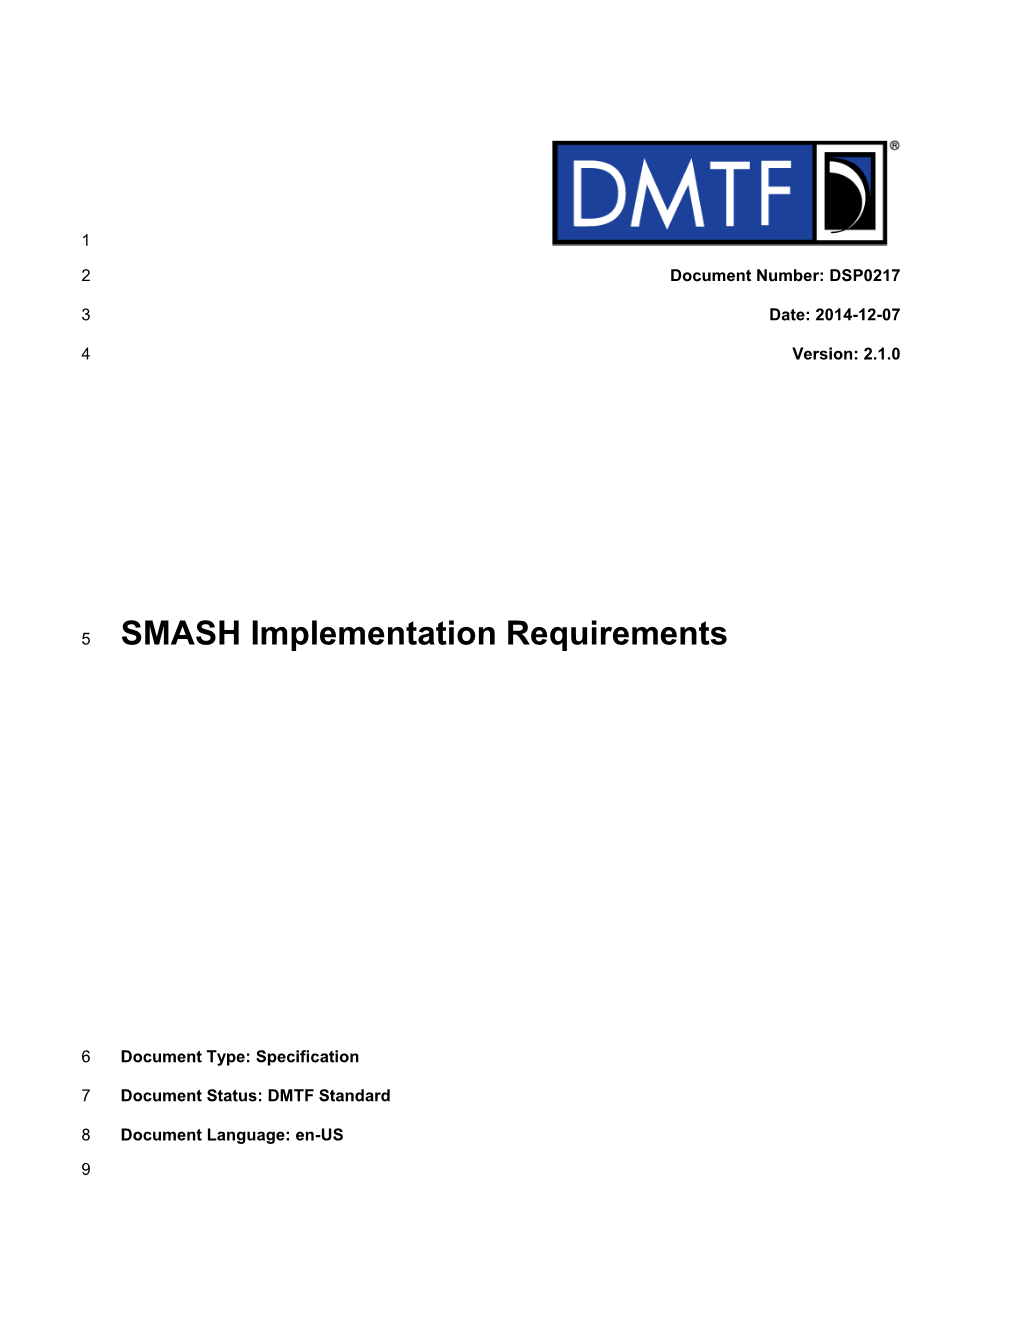 SMASH Implementation Requirements